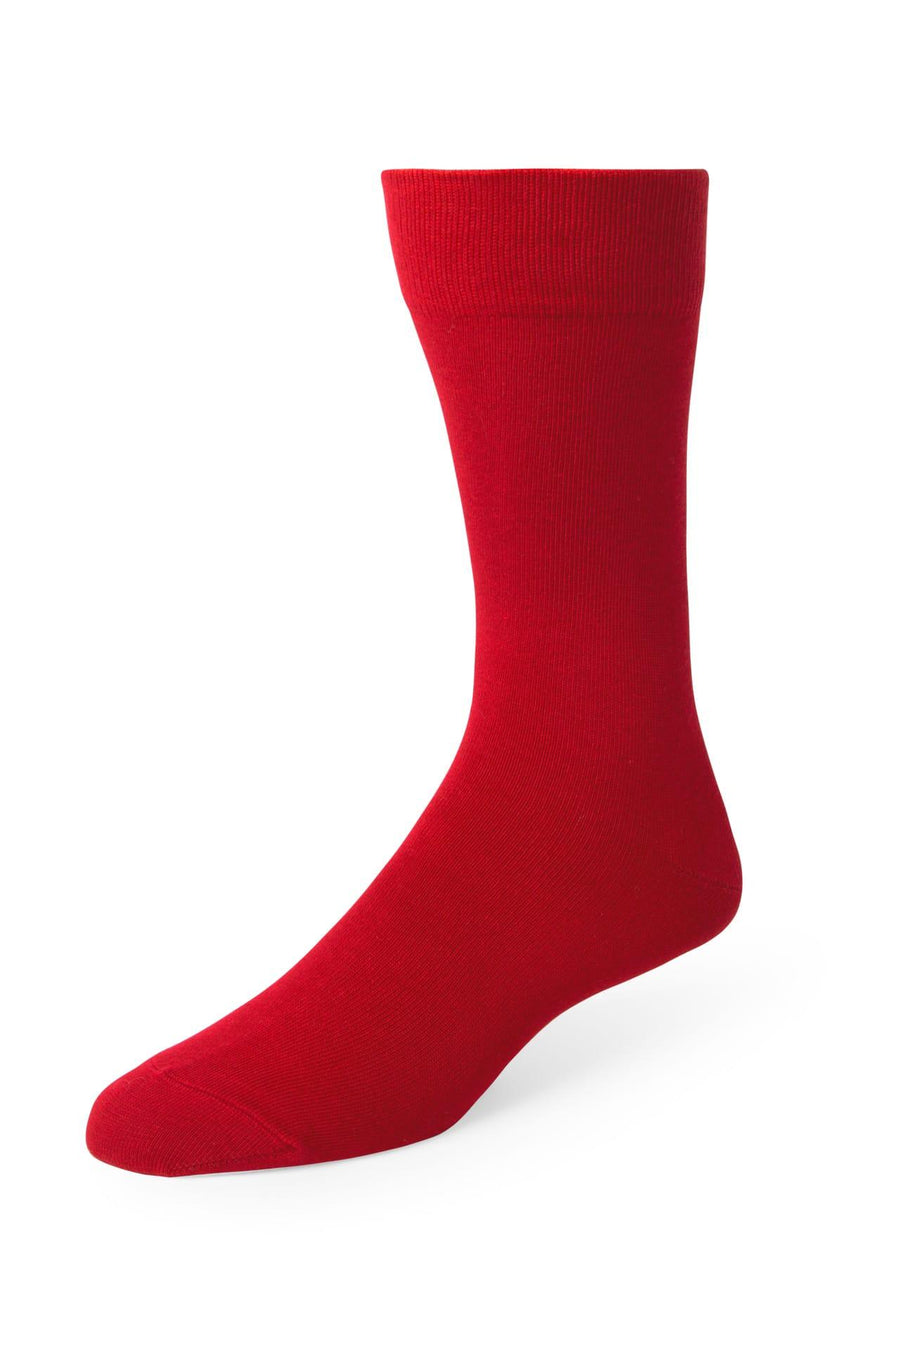 Ferrari Red Dress Socks